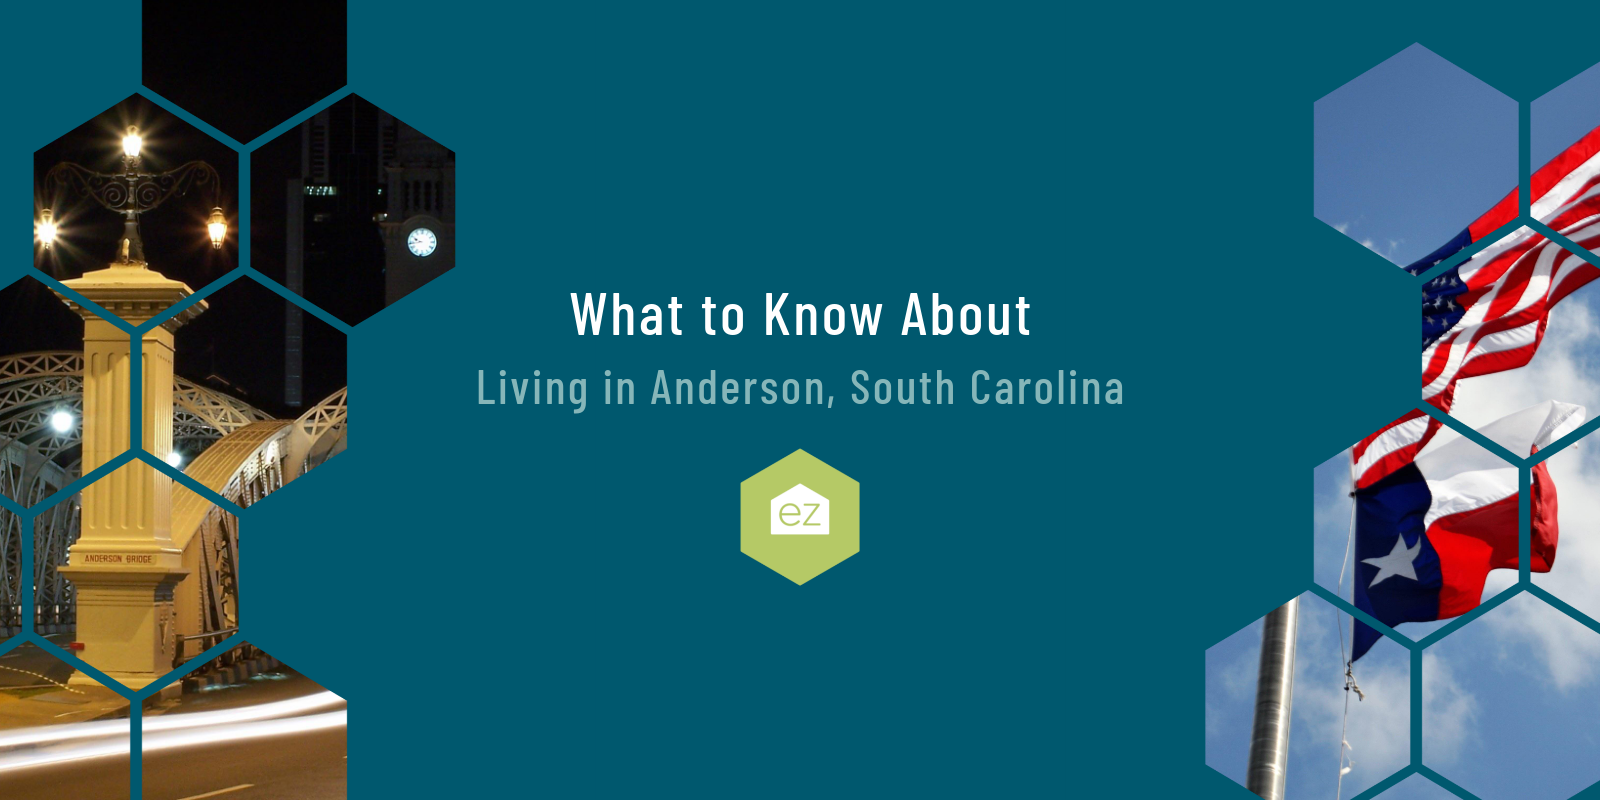 Photos of Anderson South Carolina